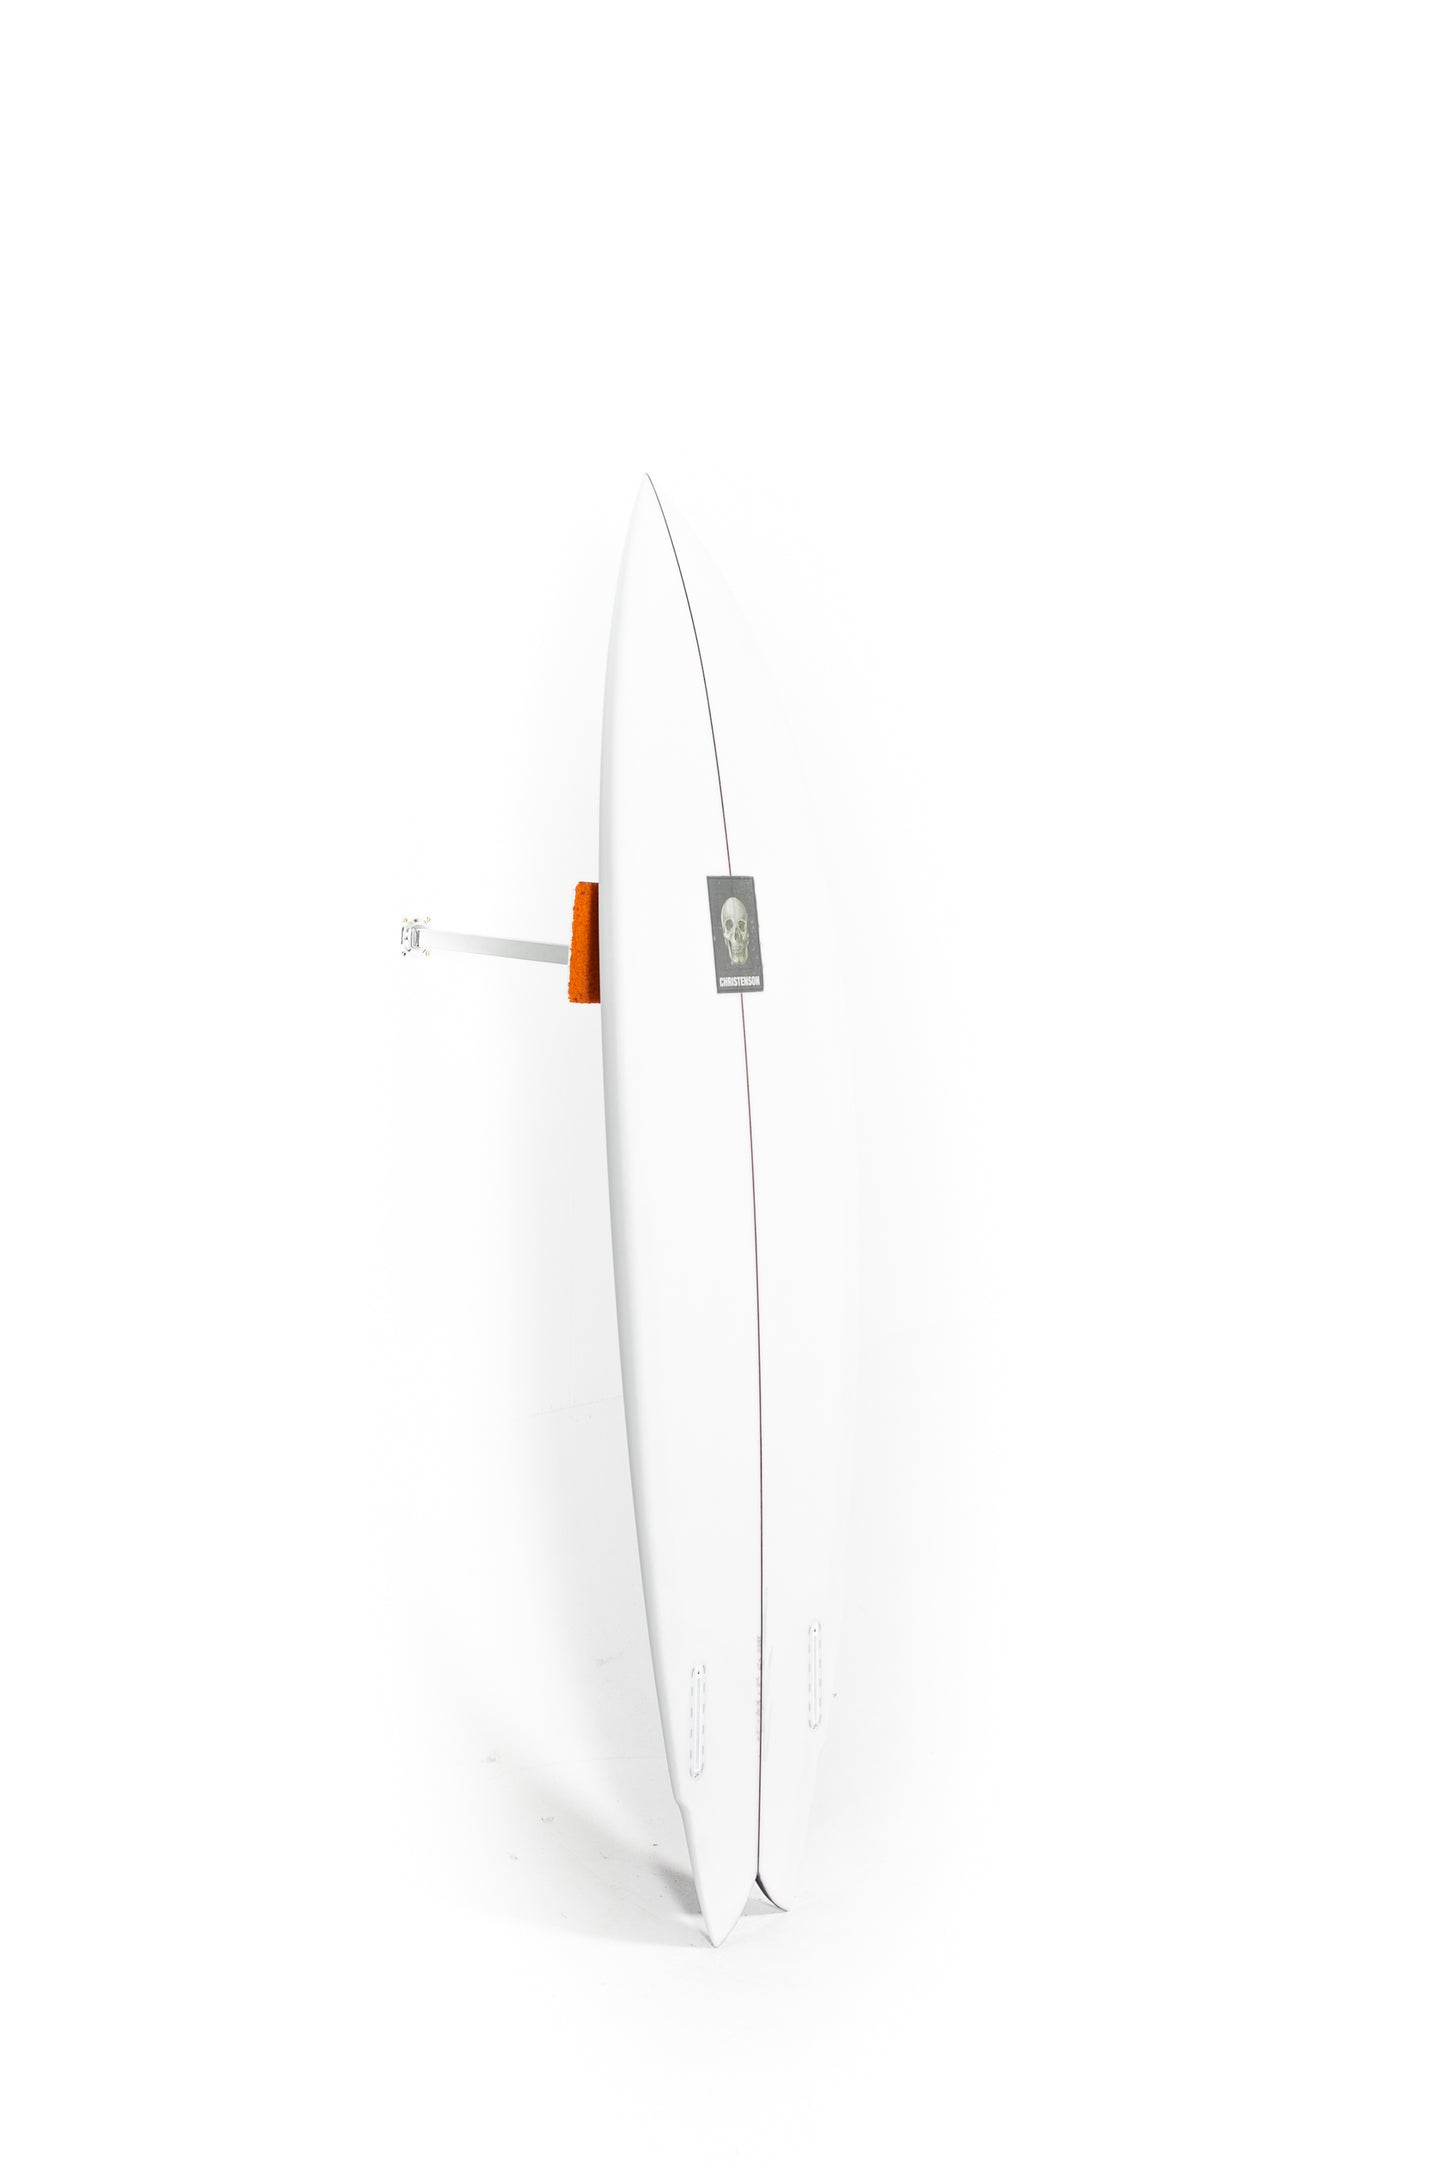 
                  
                       Pukas-Surf-Shop-Christenson-Surfboards-Wolverine-Chris-Christenson-6_2_
                  
                